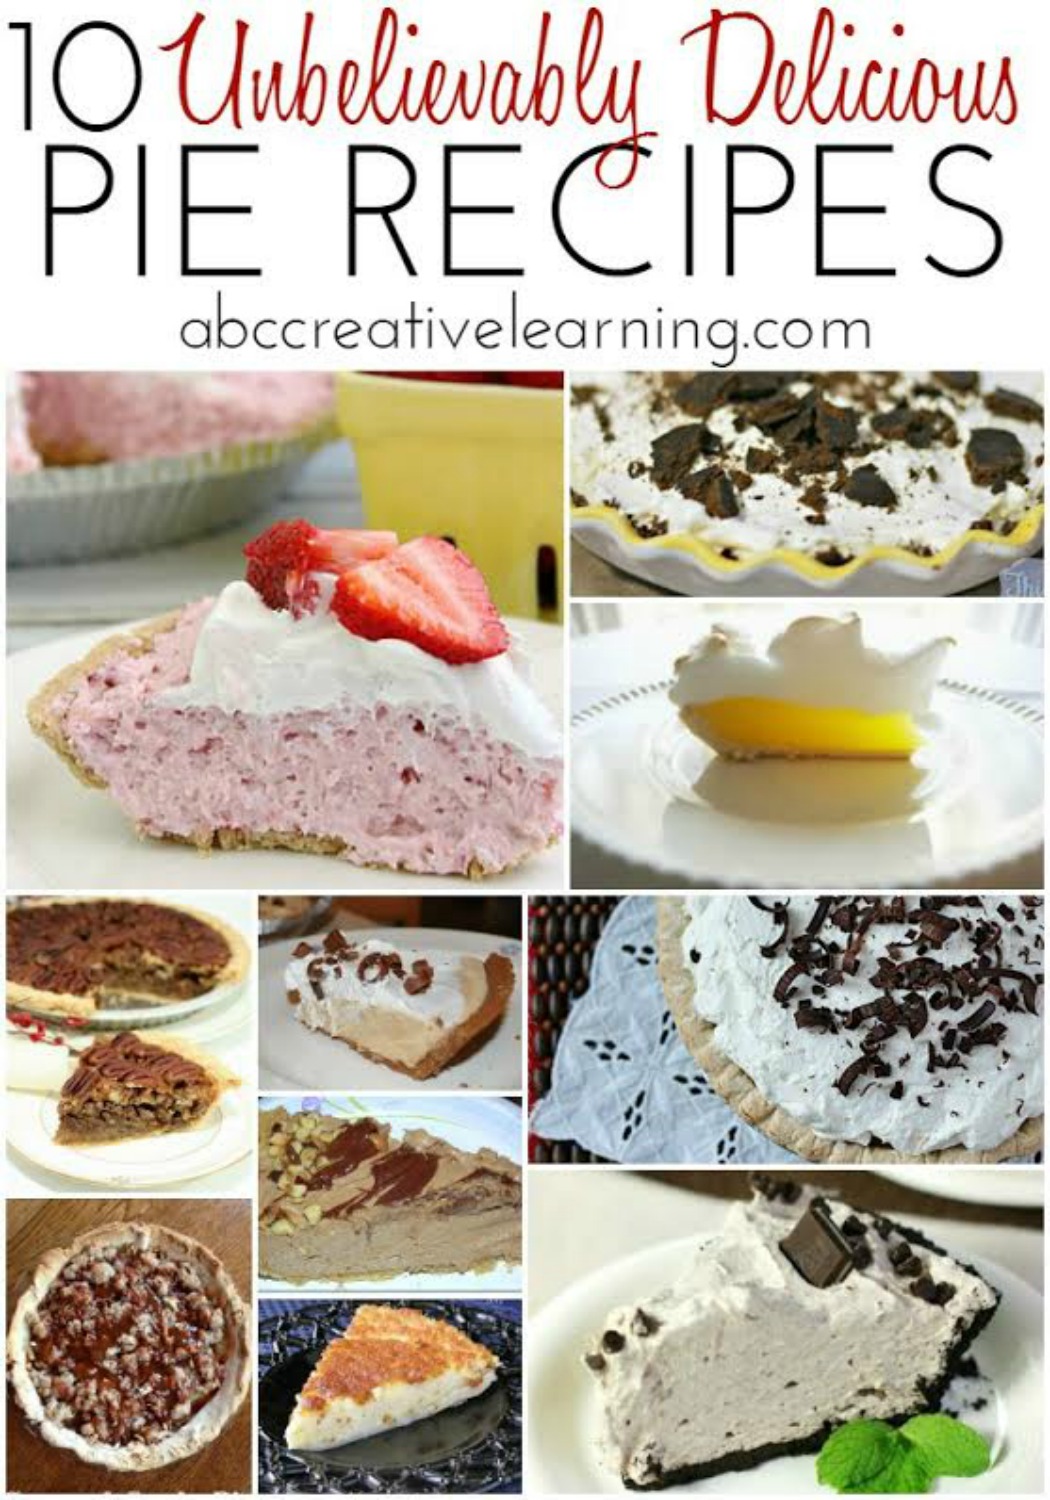 10 Unbelievably Delicious Pie Recipes - abccreativelearning.com